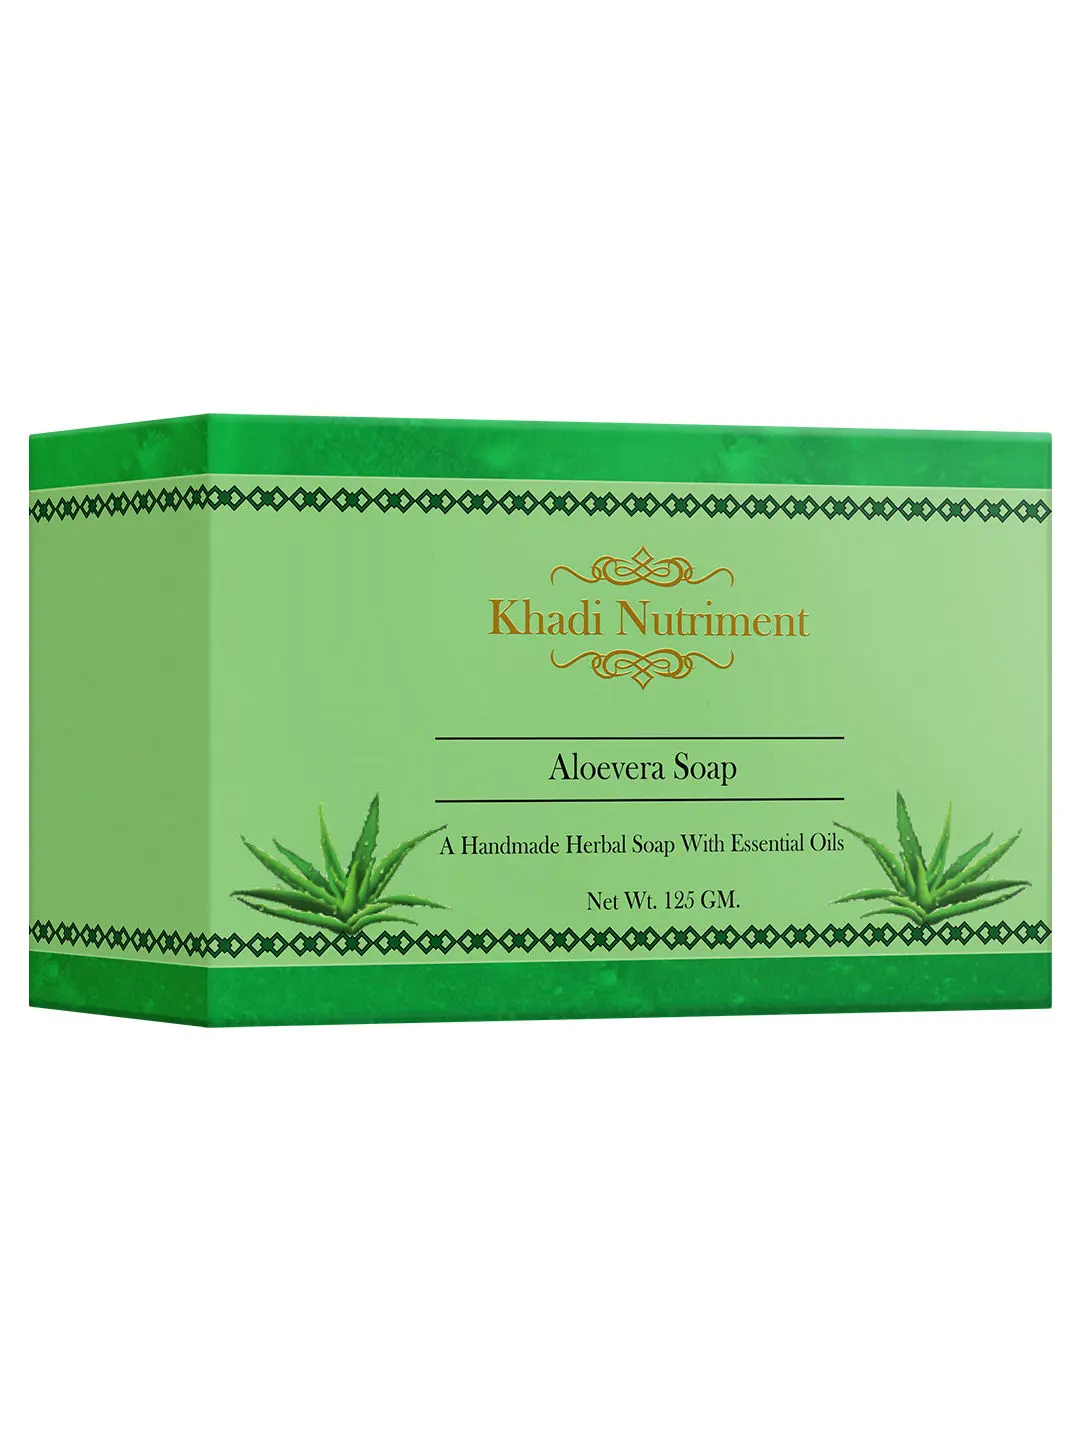 Khadi Nutriment Aloe vera Soap,125 gm Soap for Unisex (Pack of 1)